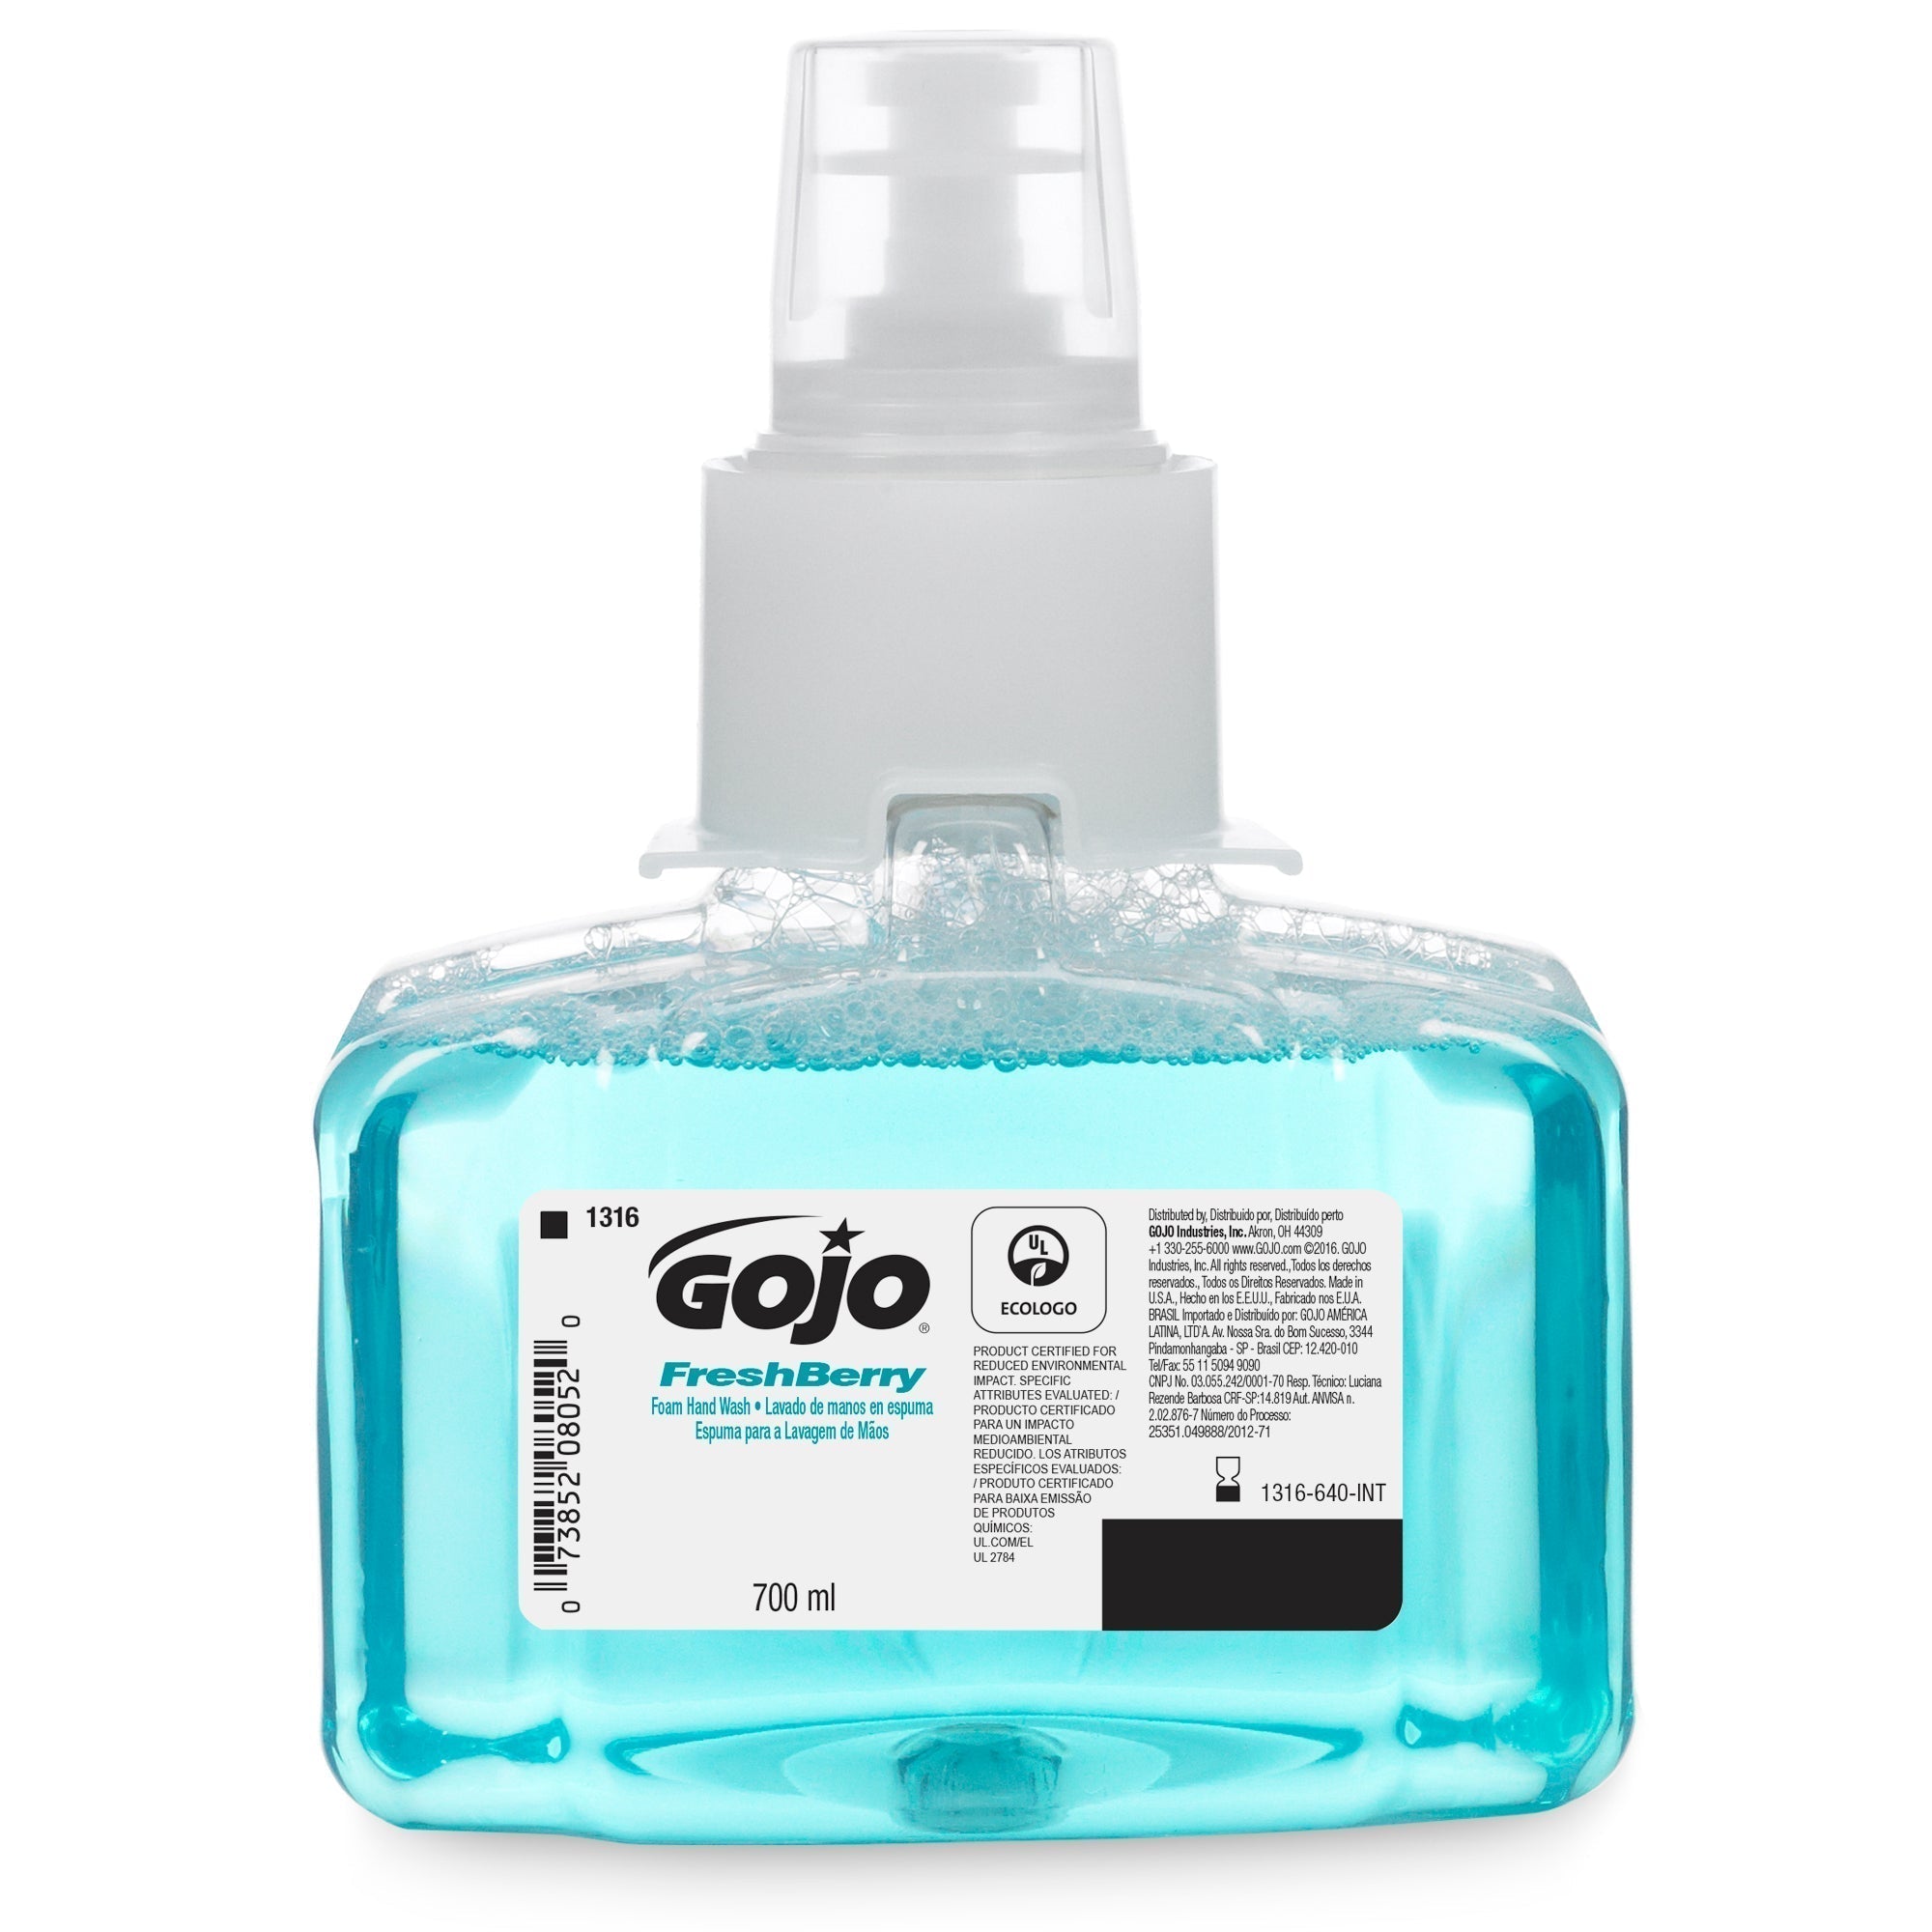 Gojo Gojo Freshberry Foam Hand Wash 700mL LTX-7 Refill - CT/3 Healthcare  